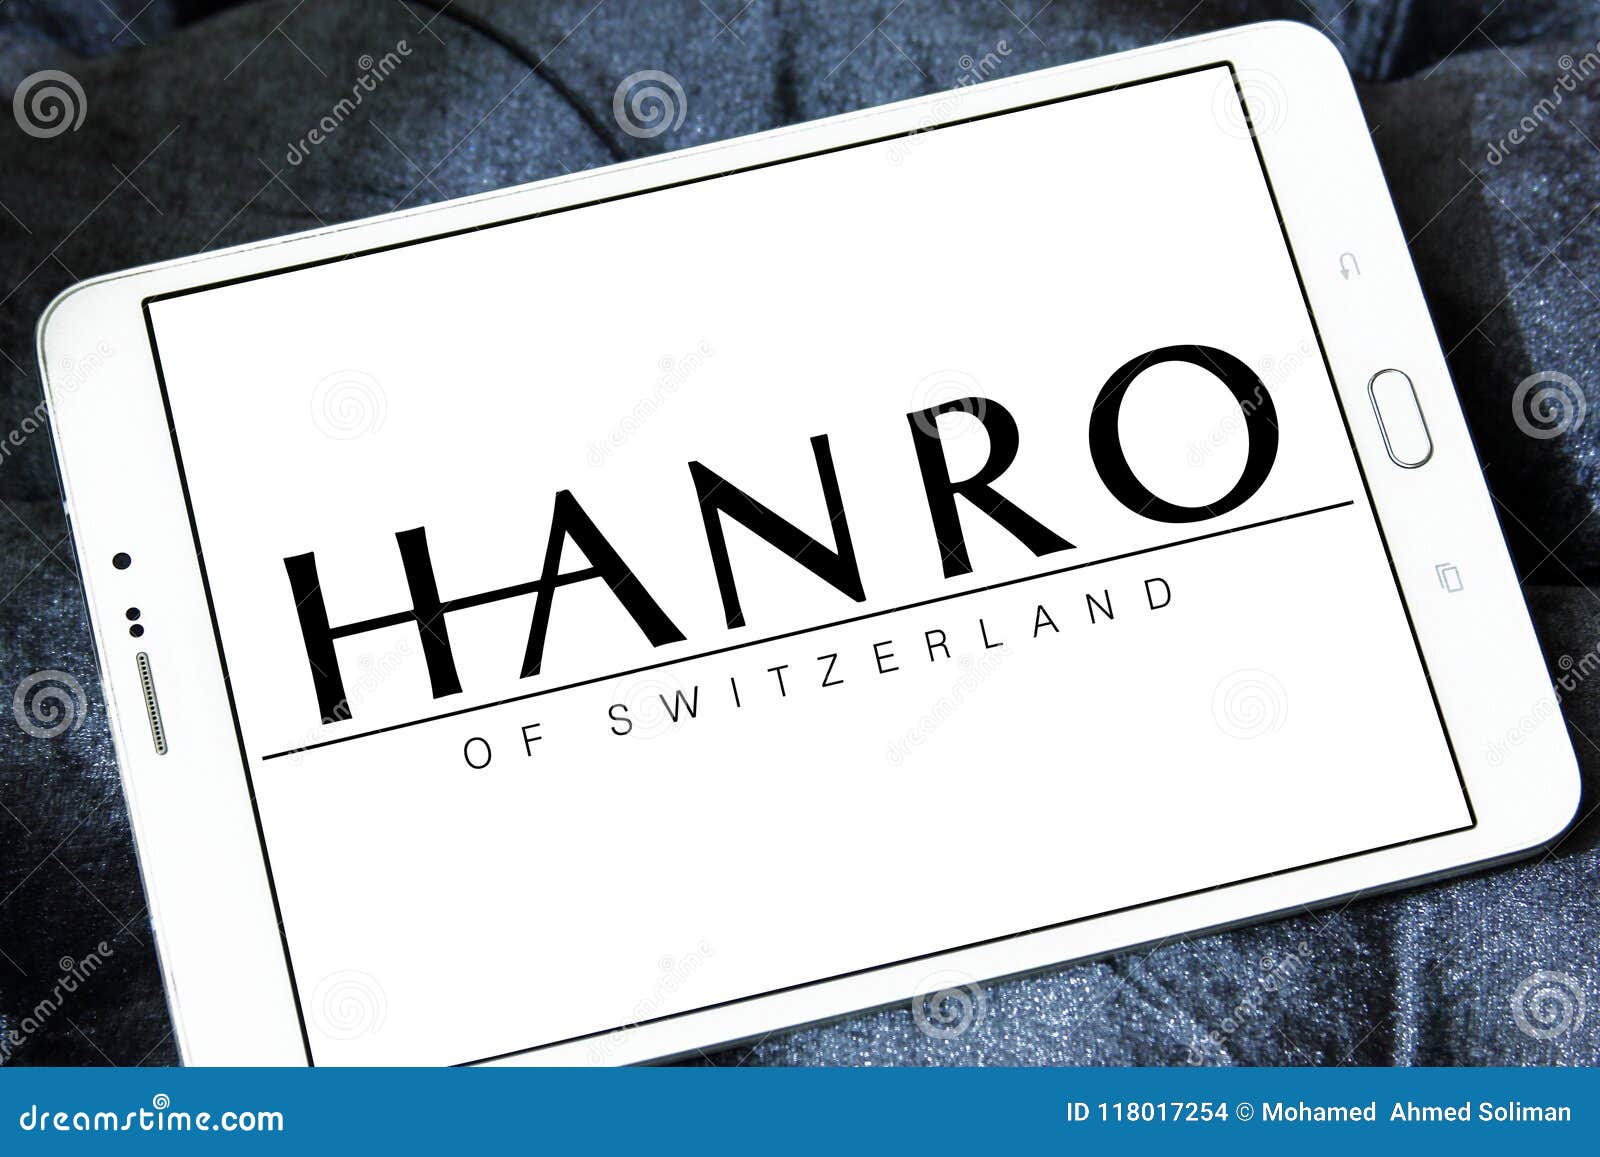 Hanro clothing brand logo editorial stock image. Image of fashion